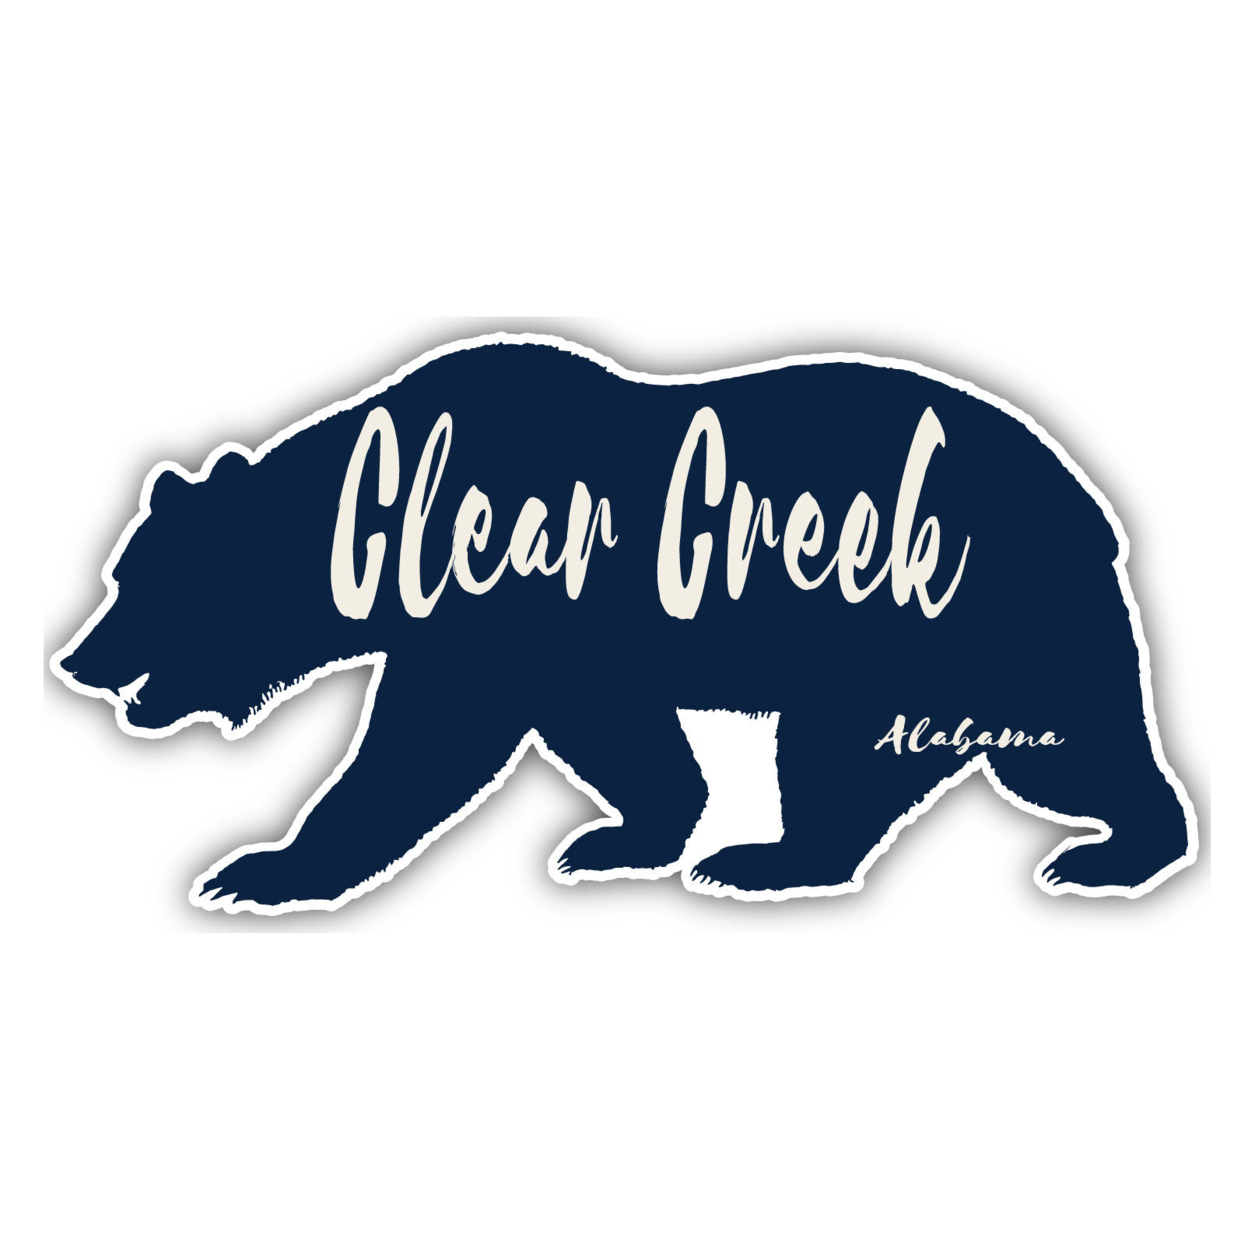 Clear Creek Alabama Souvenir Decorative Stickers (Choose Theme And Size) - Single Unit, 10-Inch, Adventures Awaits